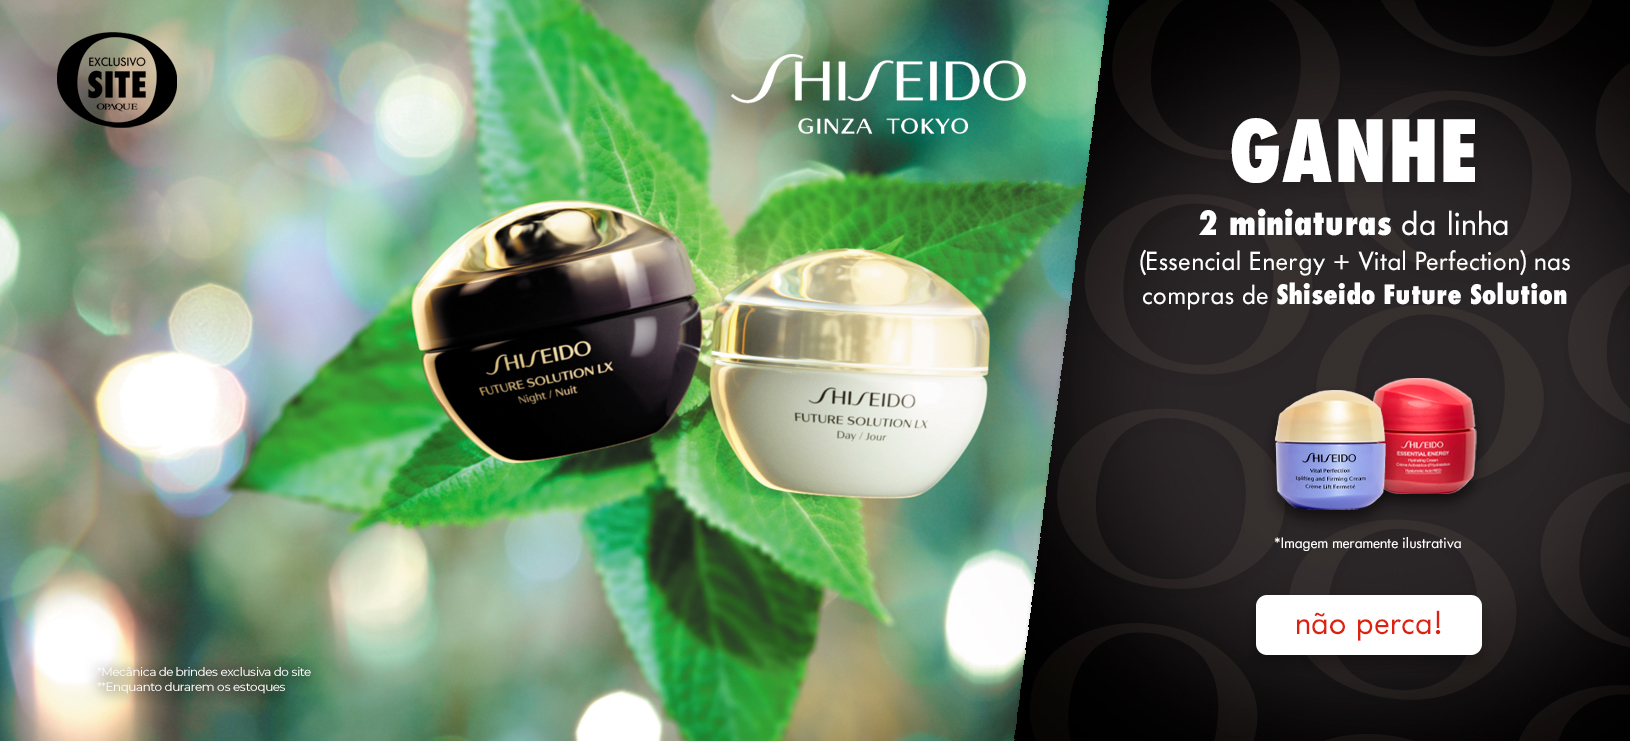 shiseido-future-solution-banner-desktop